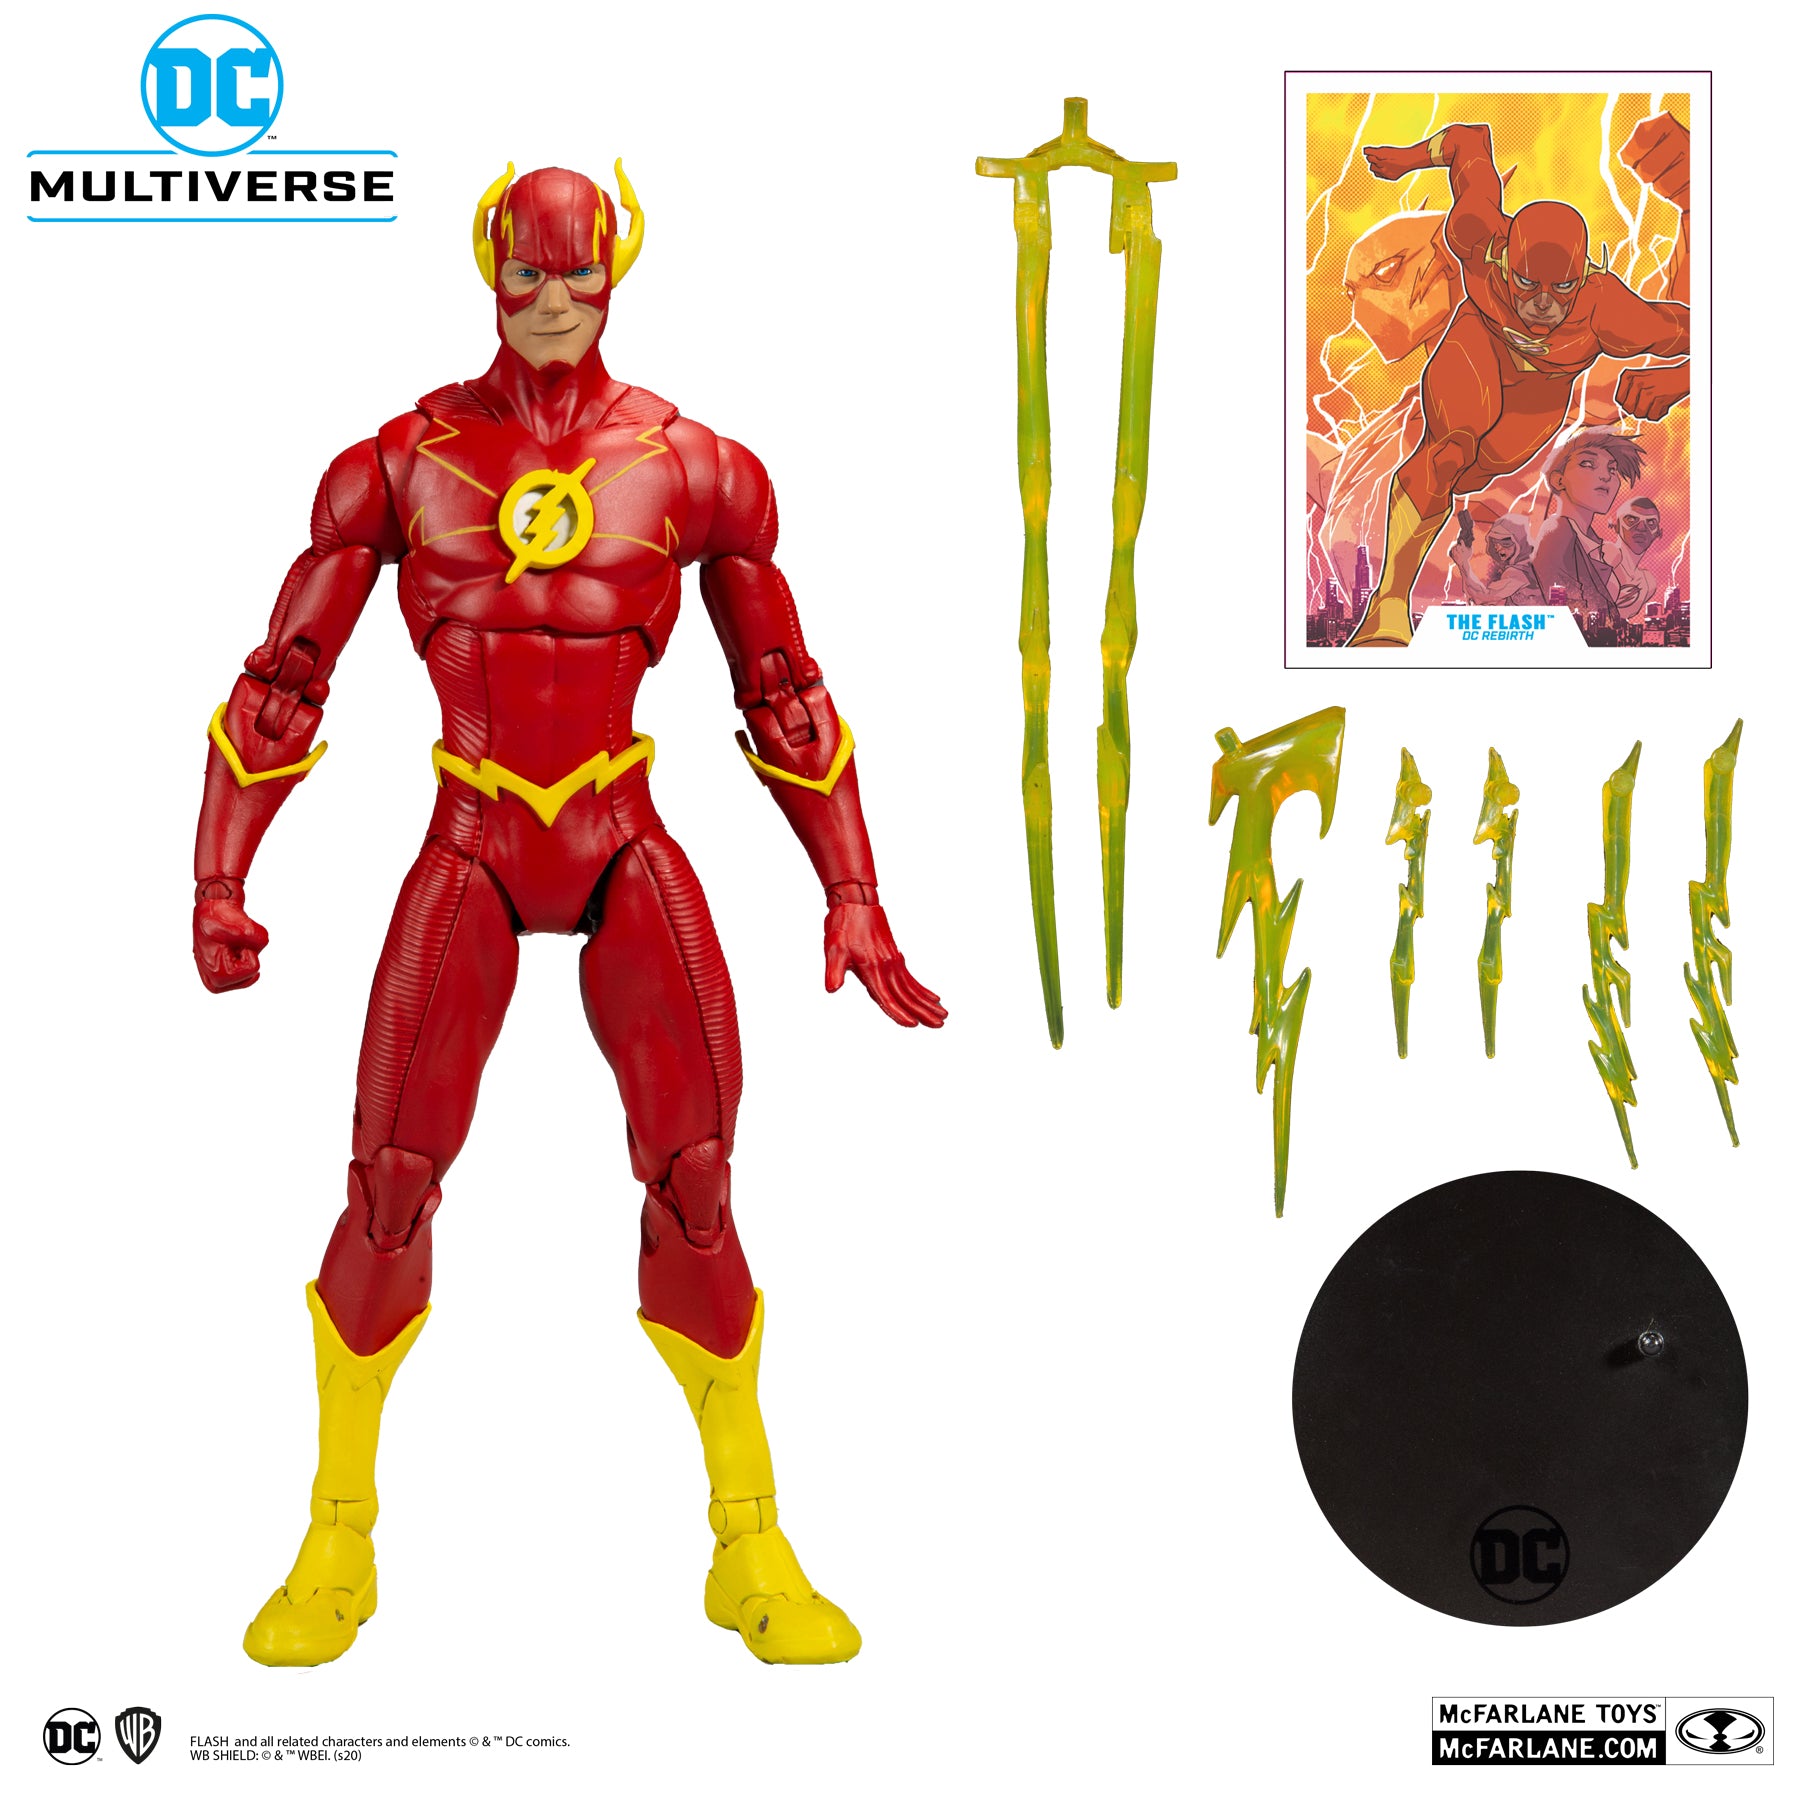 DC Multiverse: The Flash Action Figure